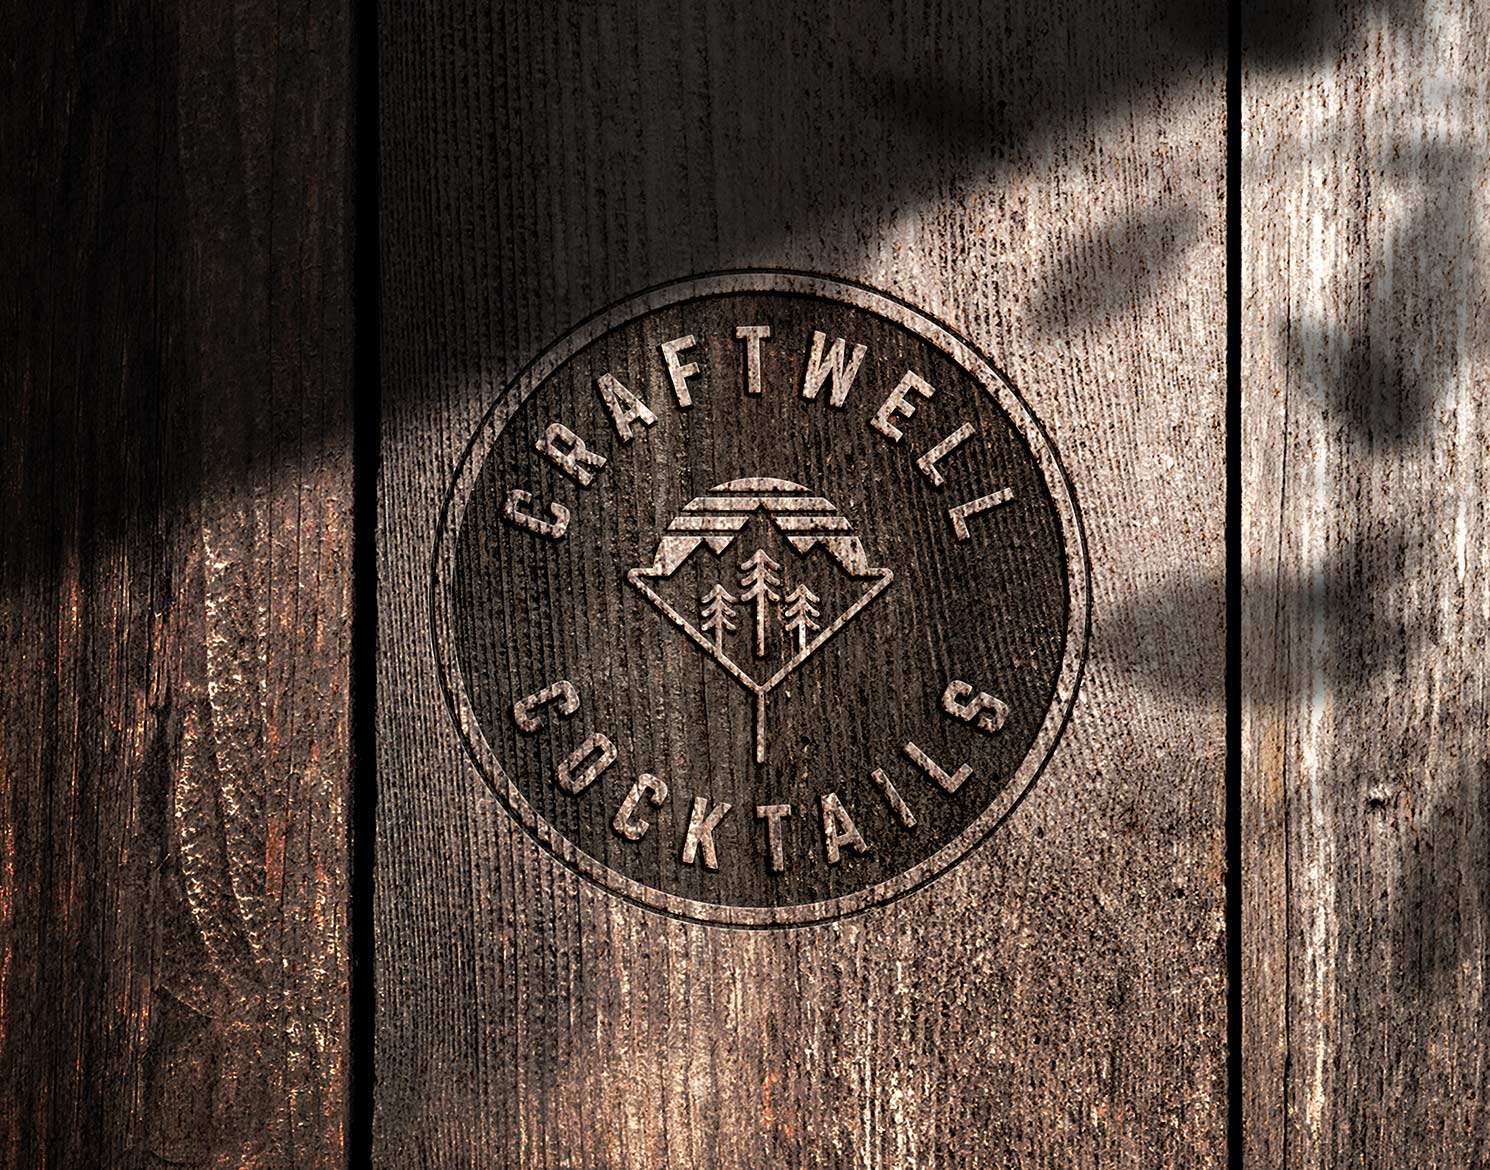 Craftwell Cocktails logo on wood